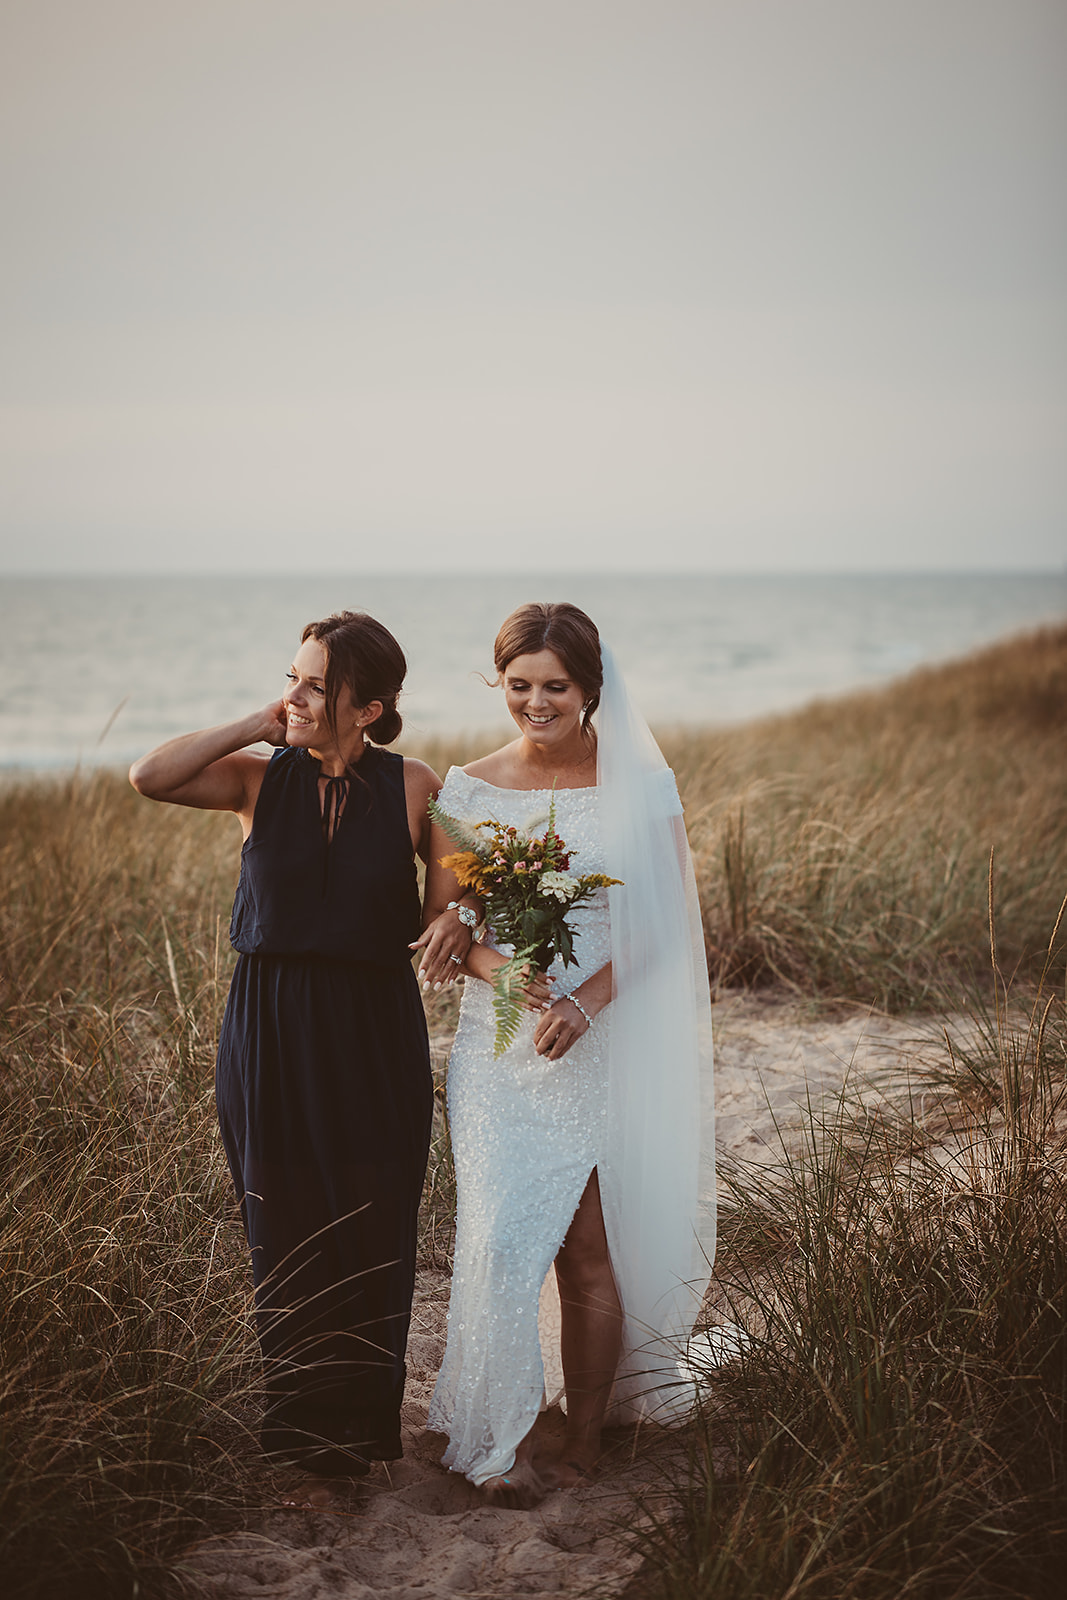 Love; Photography | Wedding Photography | Grand Rapids MI